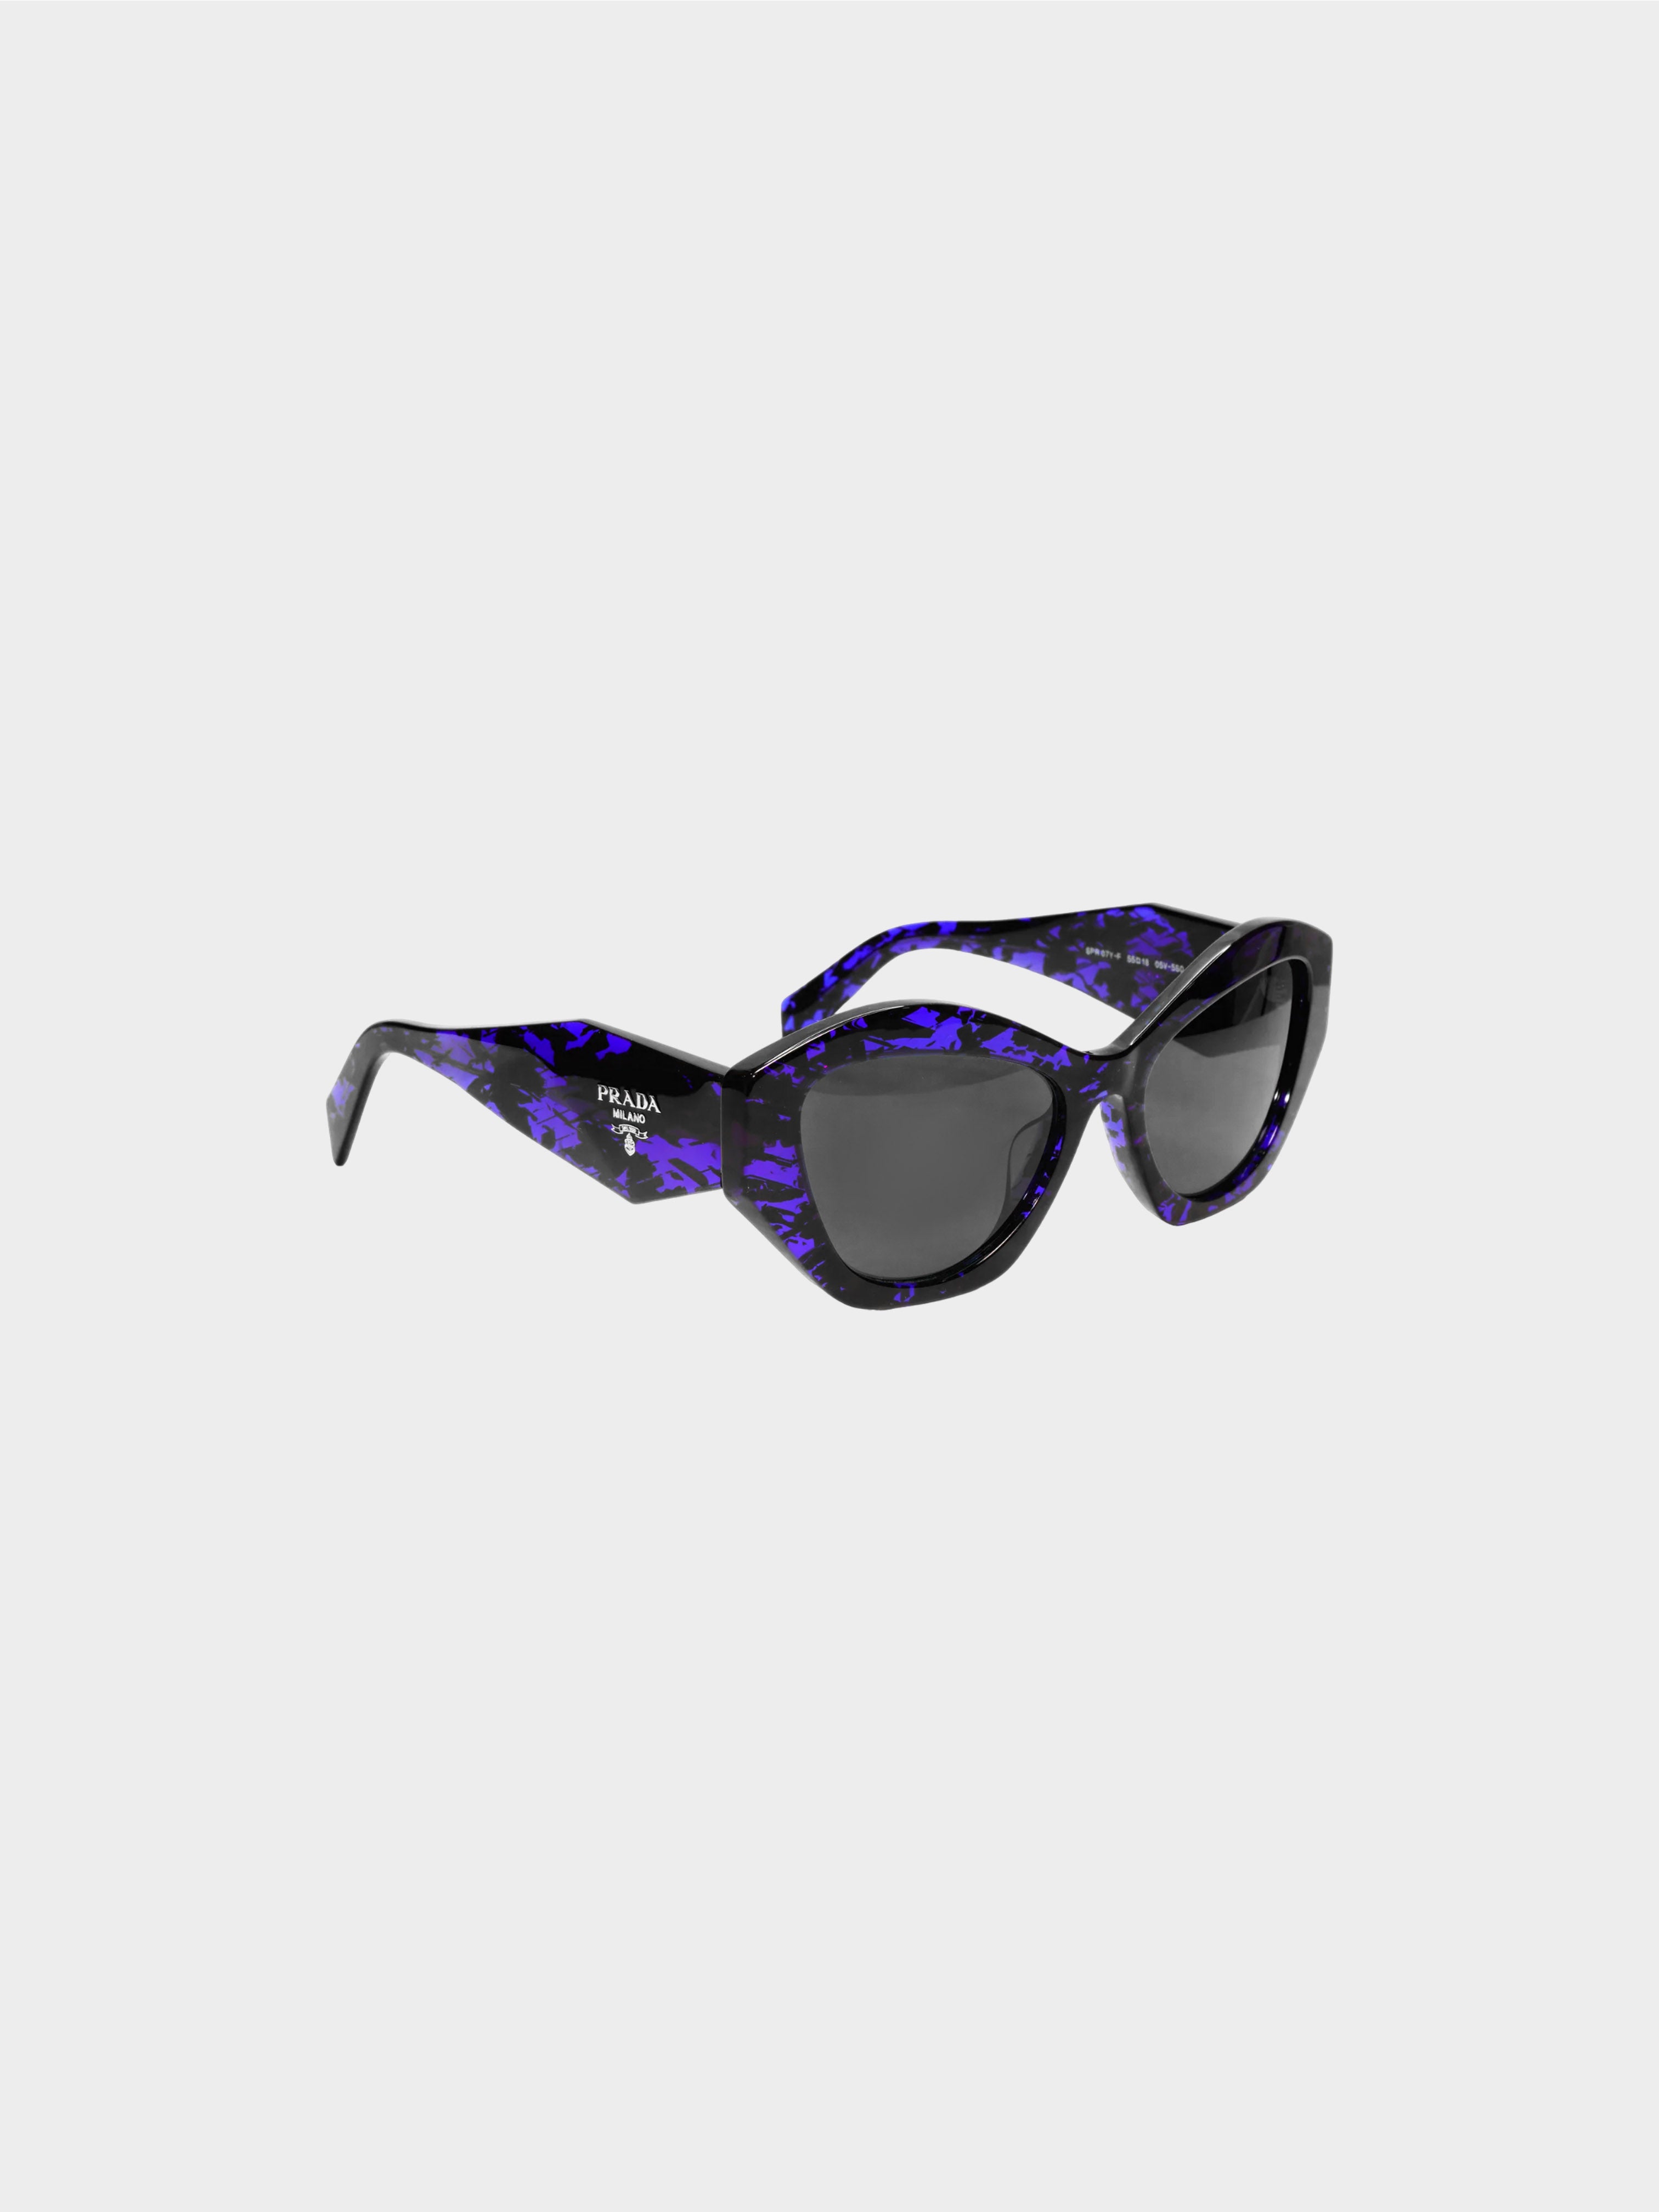 Prada 2023 Black and Purple Abstract Cat Eye Sunglasses